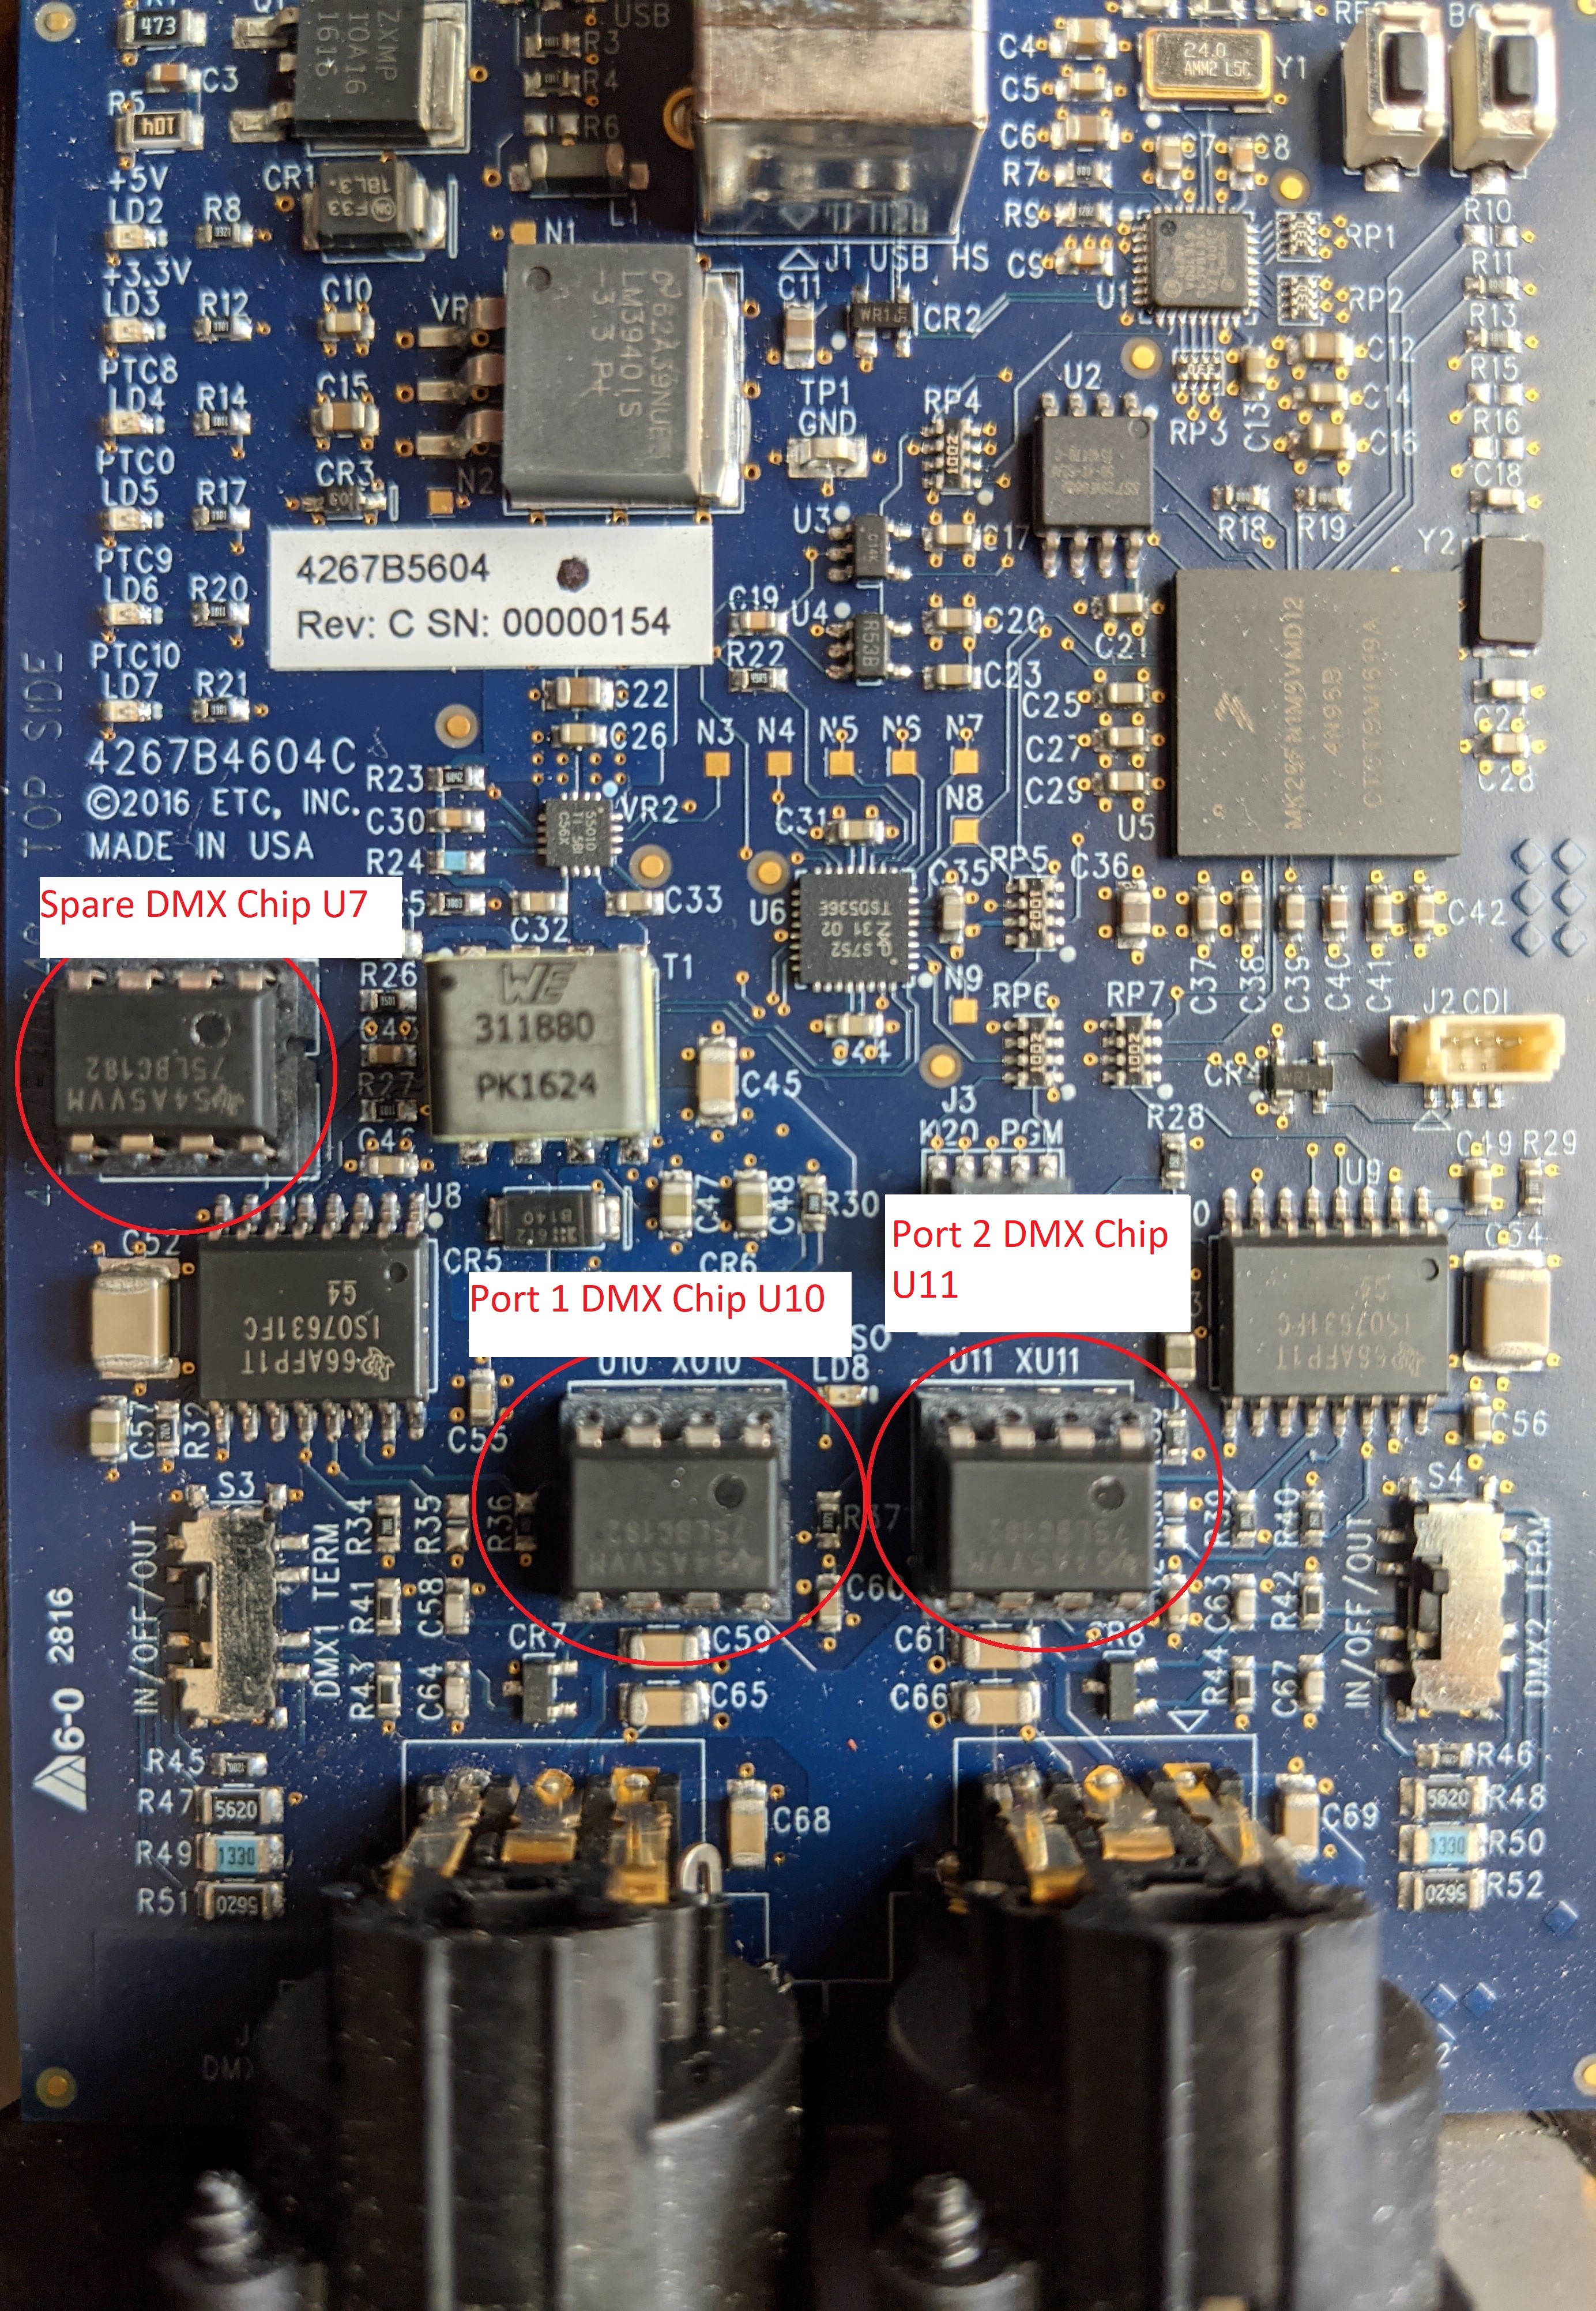 Gadget II Circuit Board Marked Up.jpg